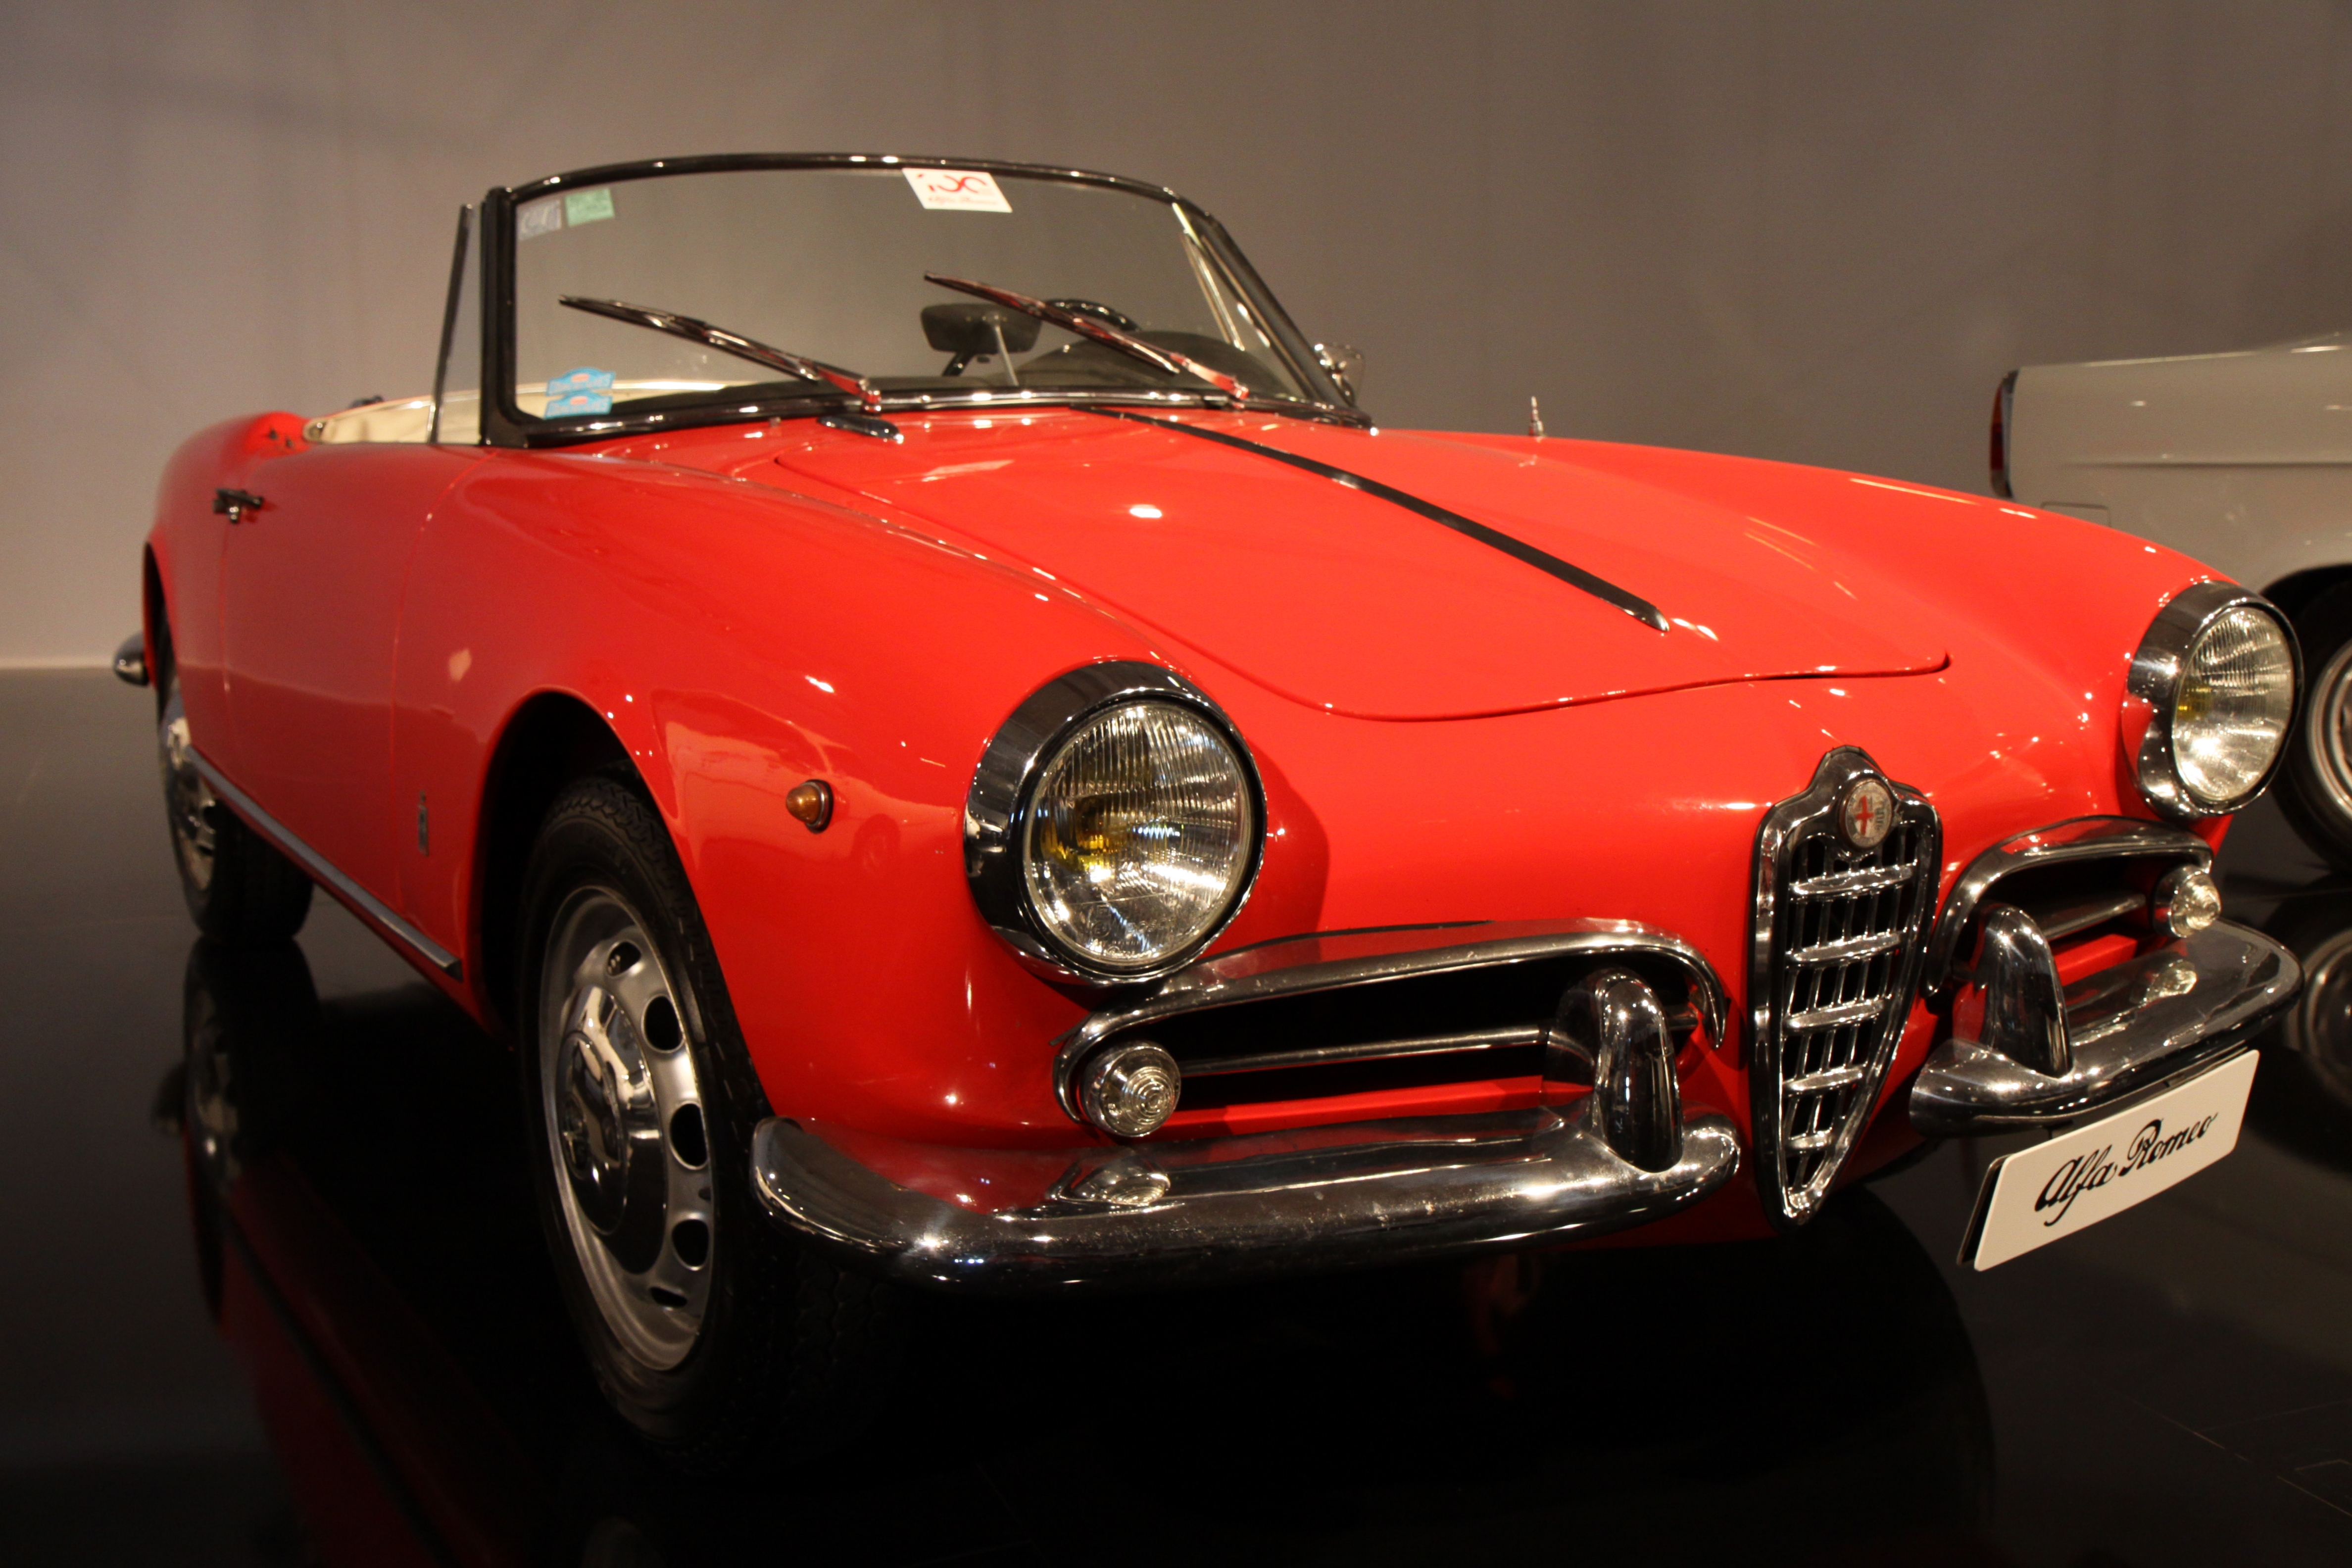 Alfa Romeo Giulietta - Wikipedia